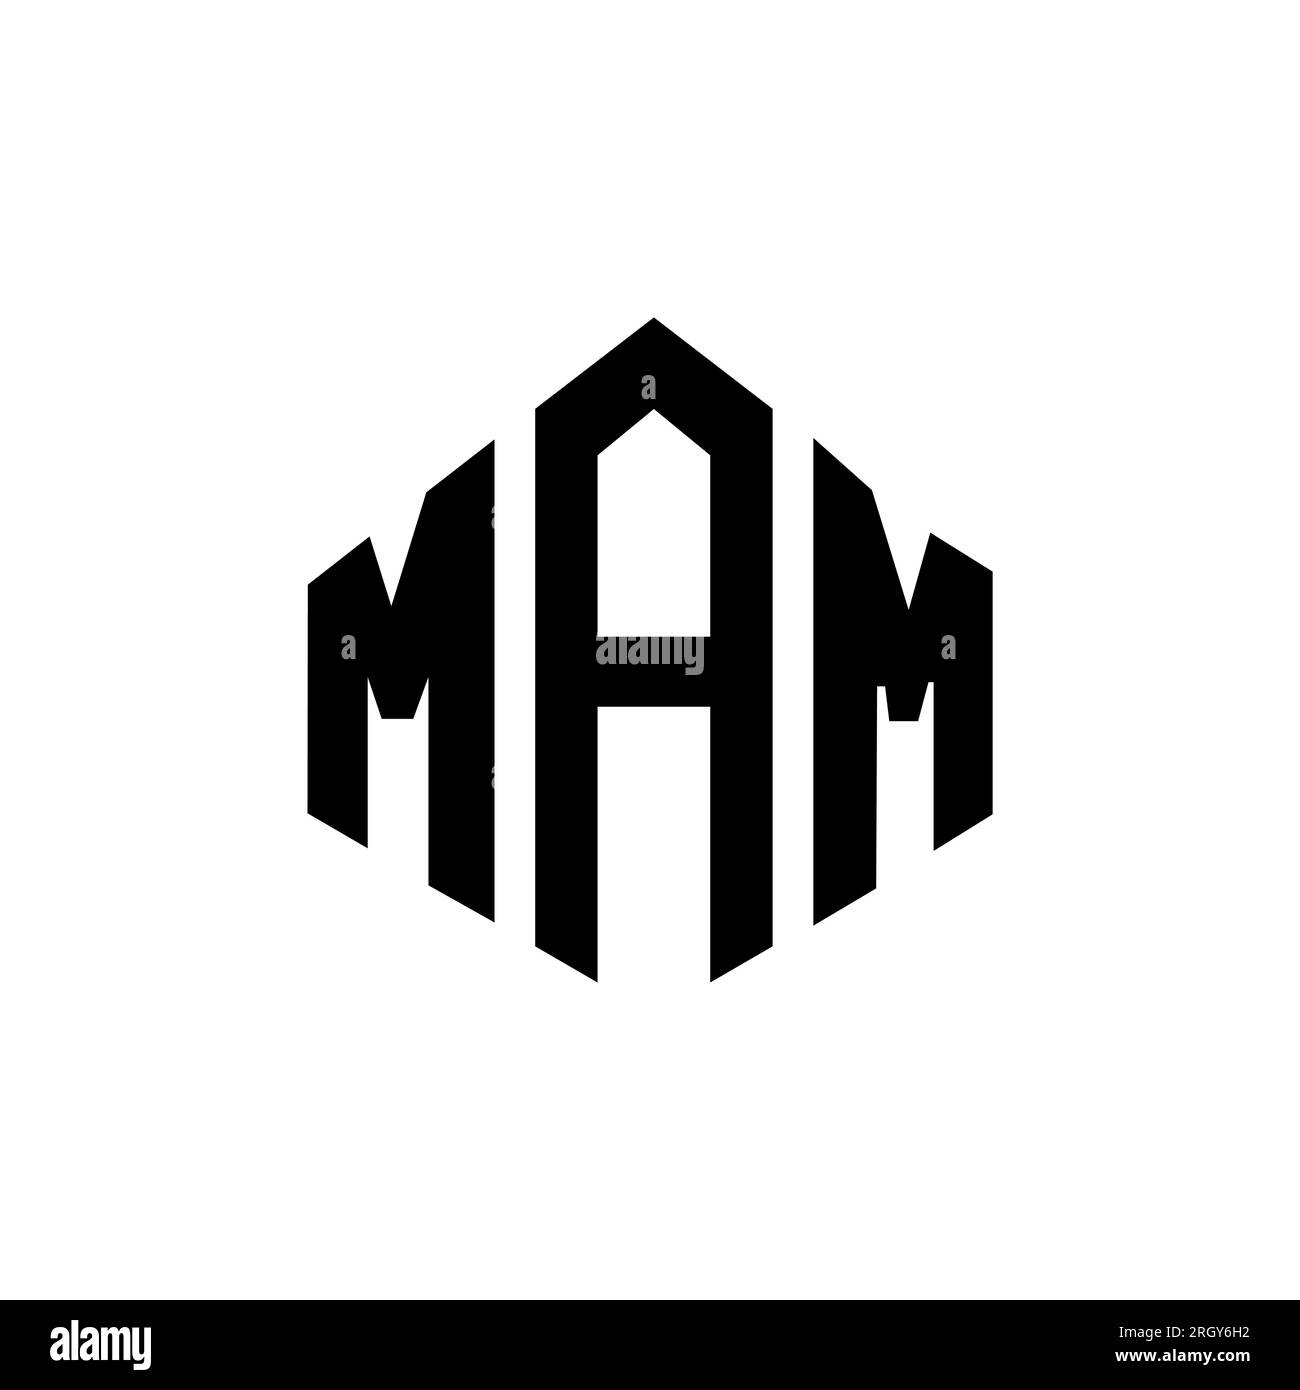 MAK, logo MAK, lettre MAK, polygone MAK, hexagone MAK, cube MAK, vecteur MAK, police MAK, conception de logo MAK, monogramme MAK, logo de la technologie MAK, symbole MAK, M. Illustration de Vecteur